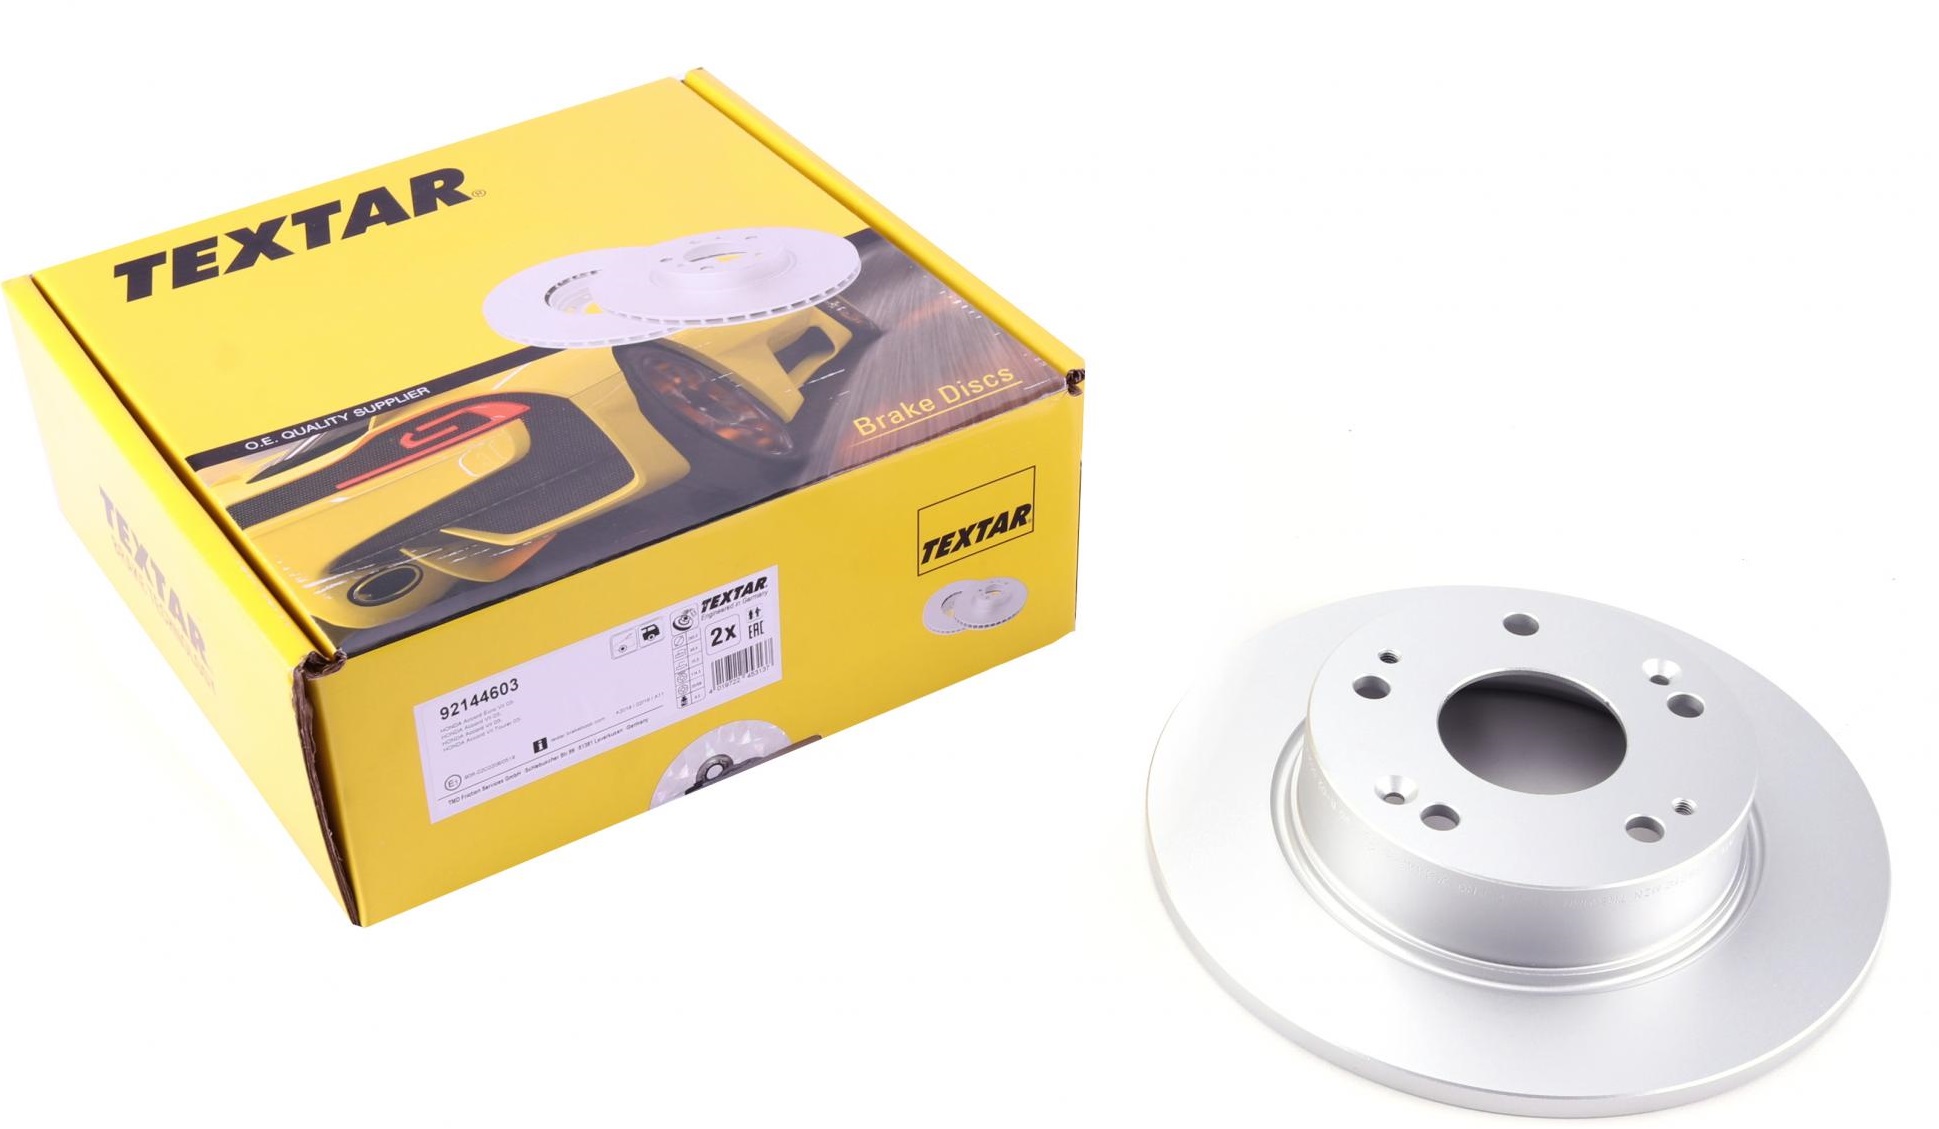 Тормозной диск Диск тормозной (задний) Honda Accord VII 03-08 (260x10) PRO TEXTAR арт. 92144603